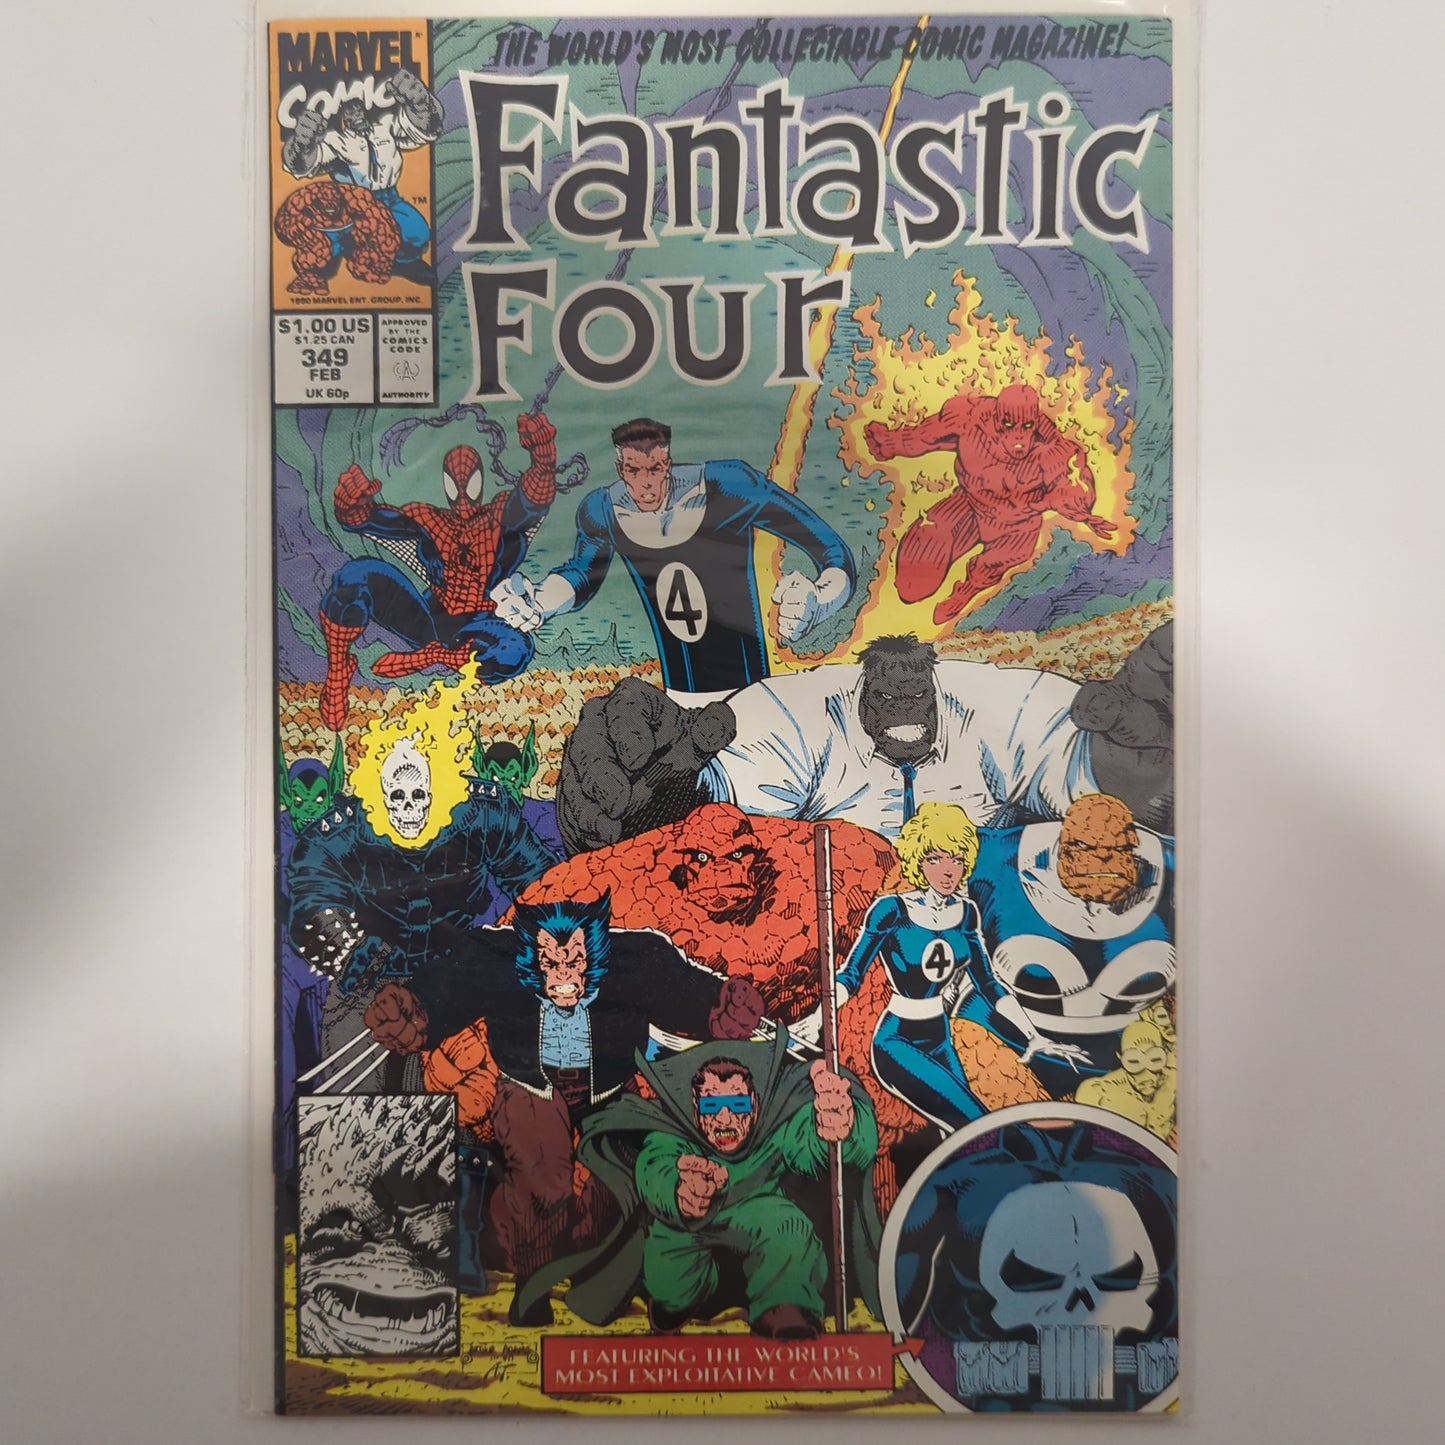 Fantastic Four #349